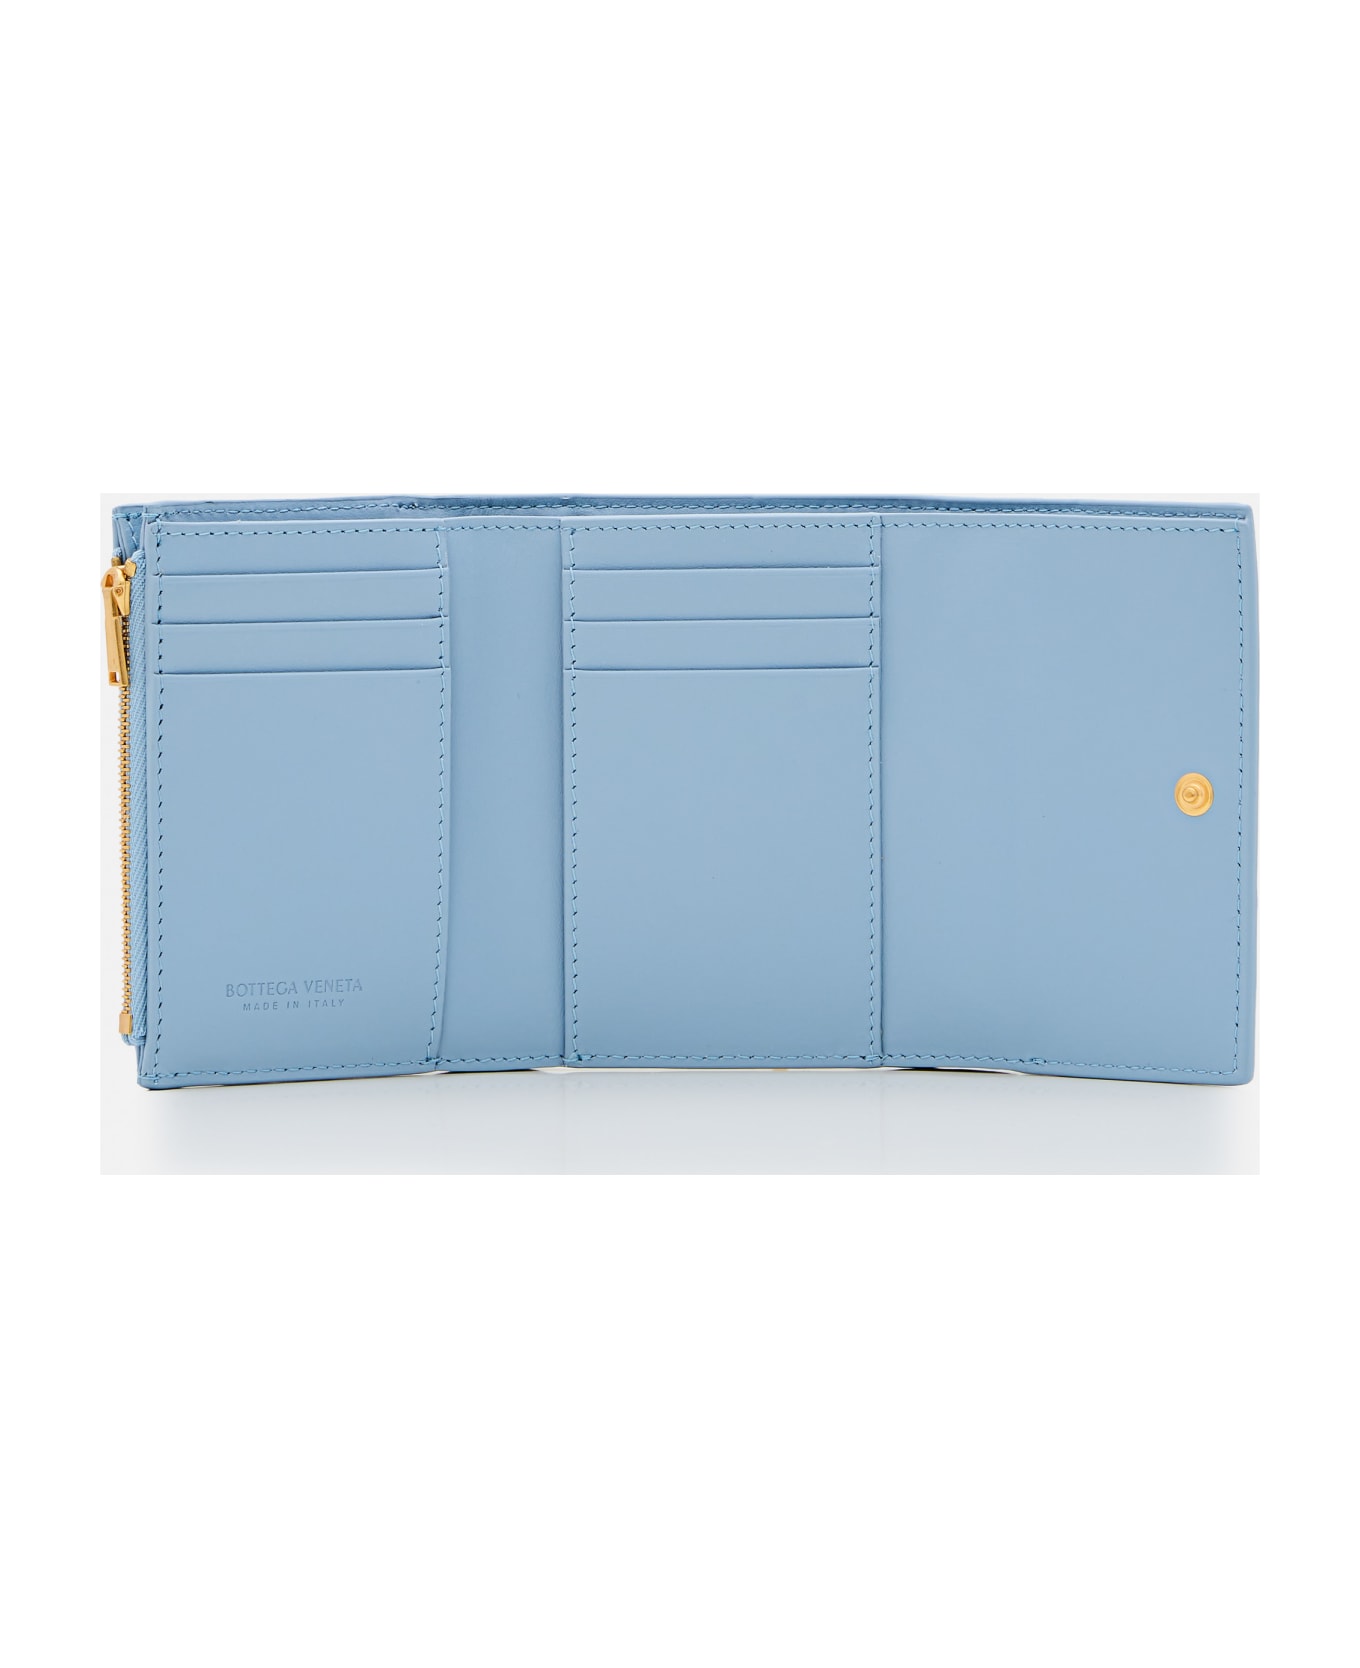 Bottega Veneta Tri-fold Leather Wallet - Clear Blue